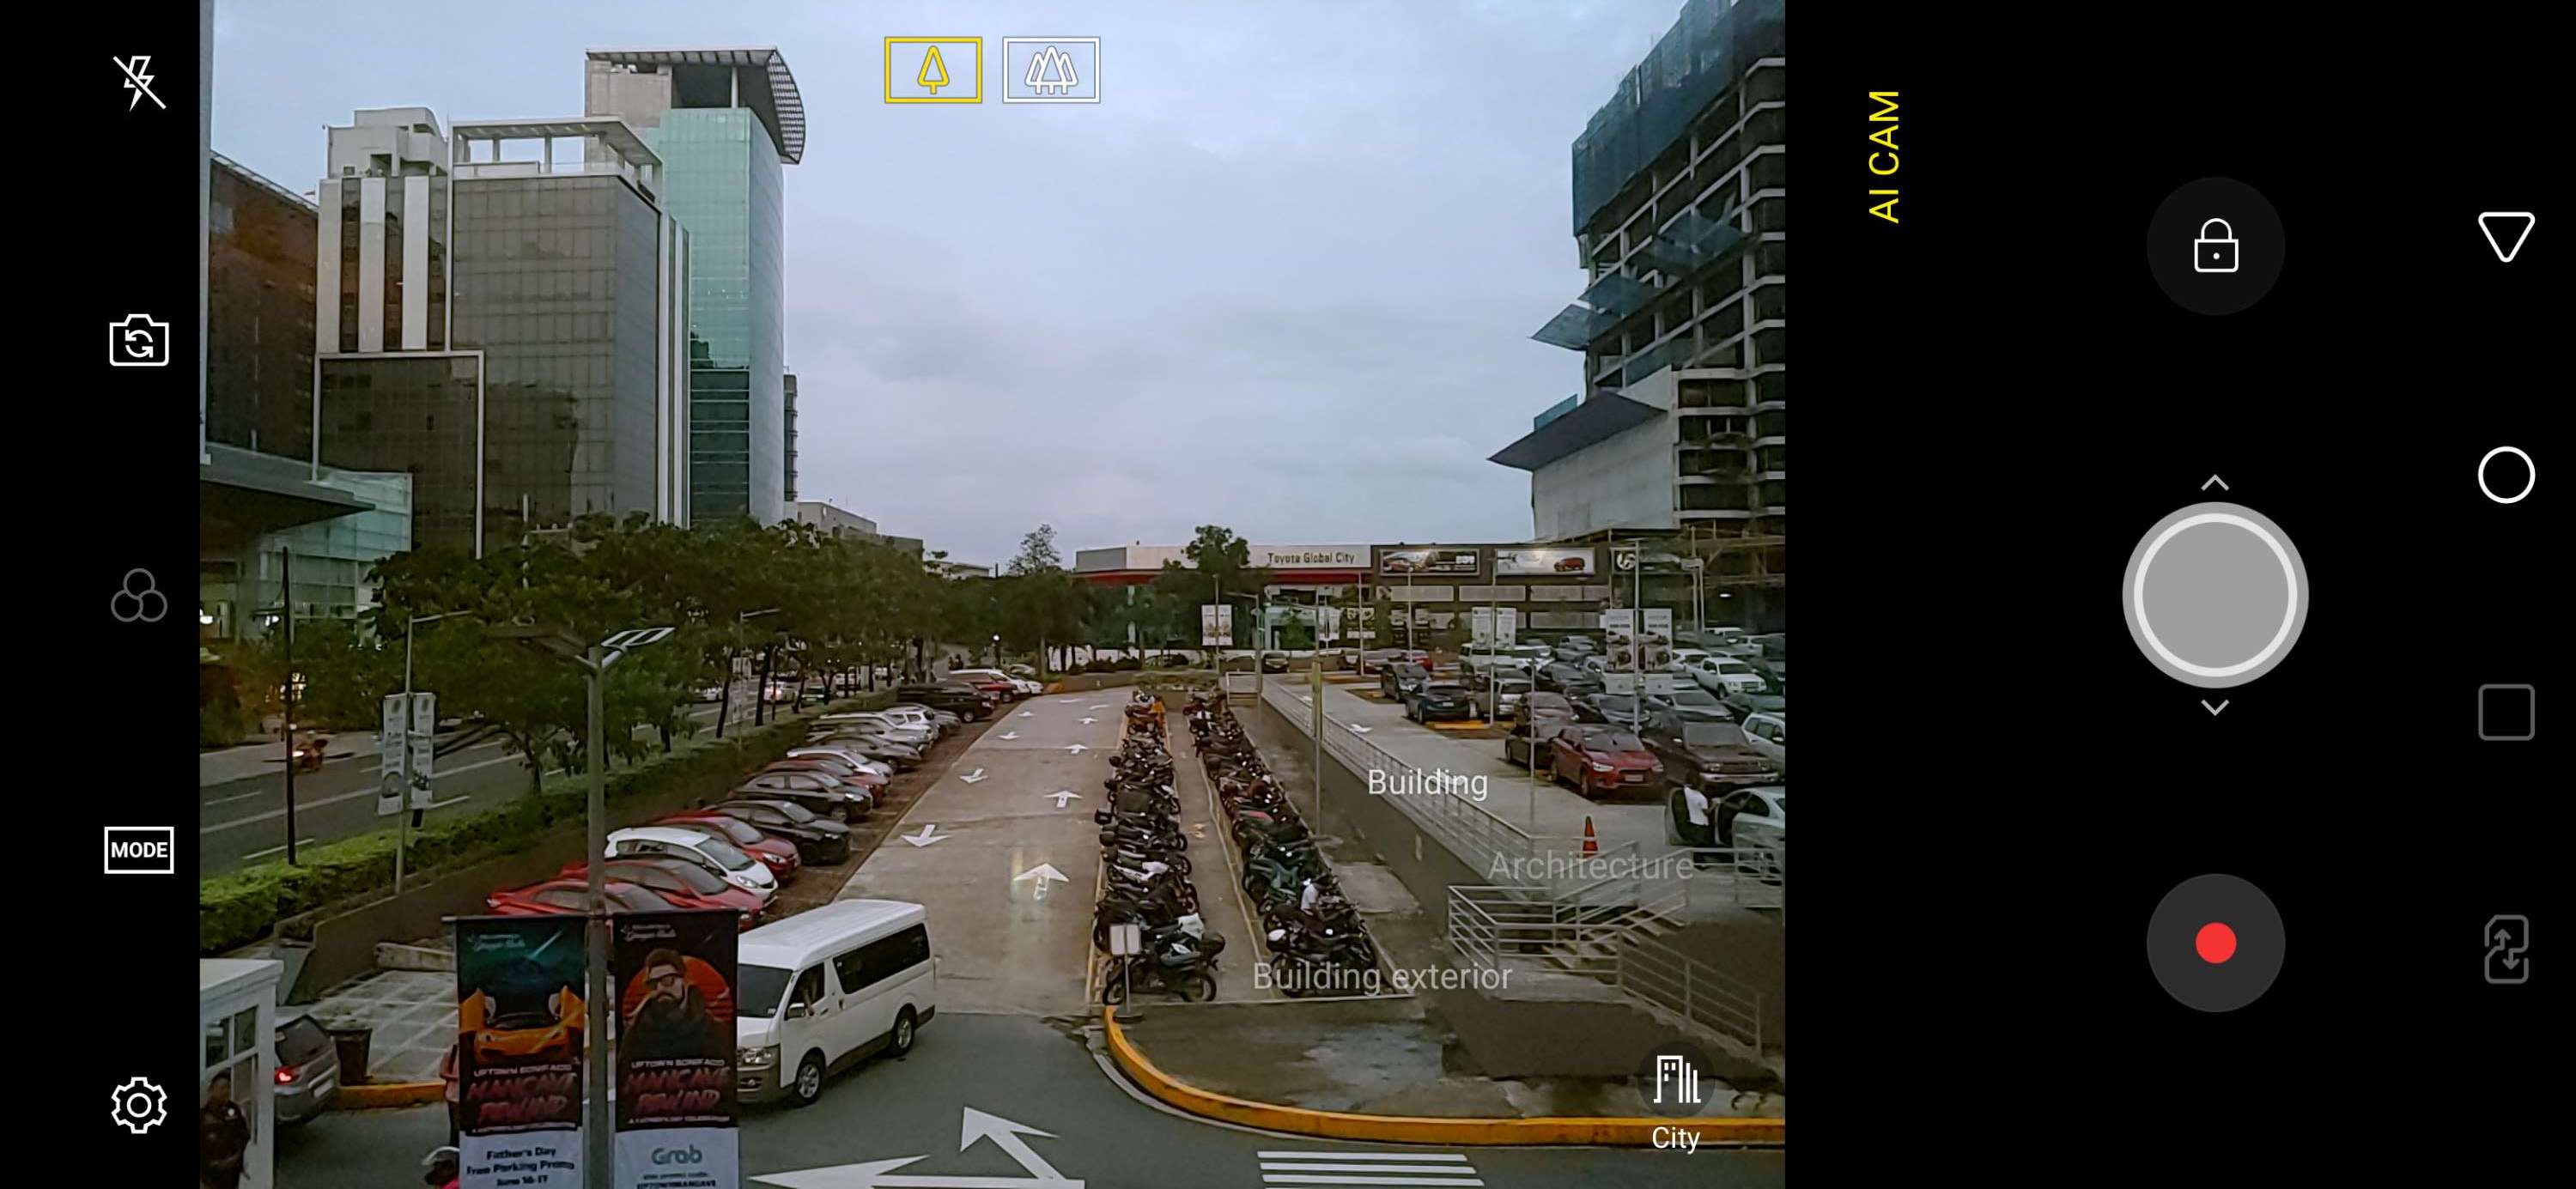 Camera settings - LG G7 ThinQ screenshot